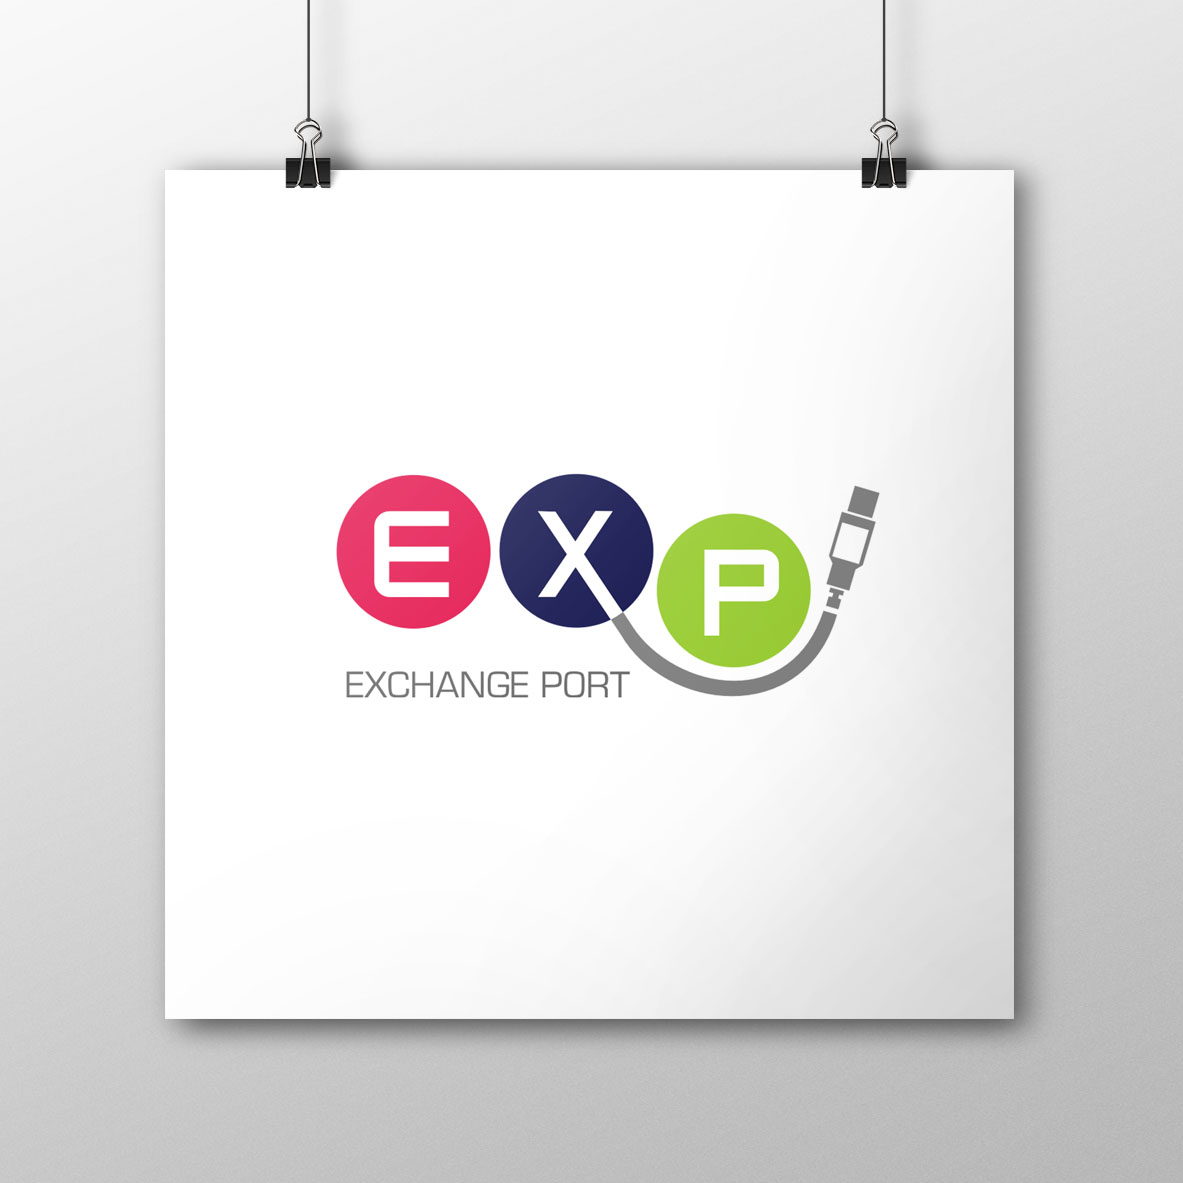 logo exp